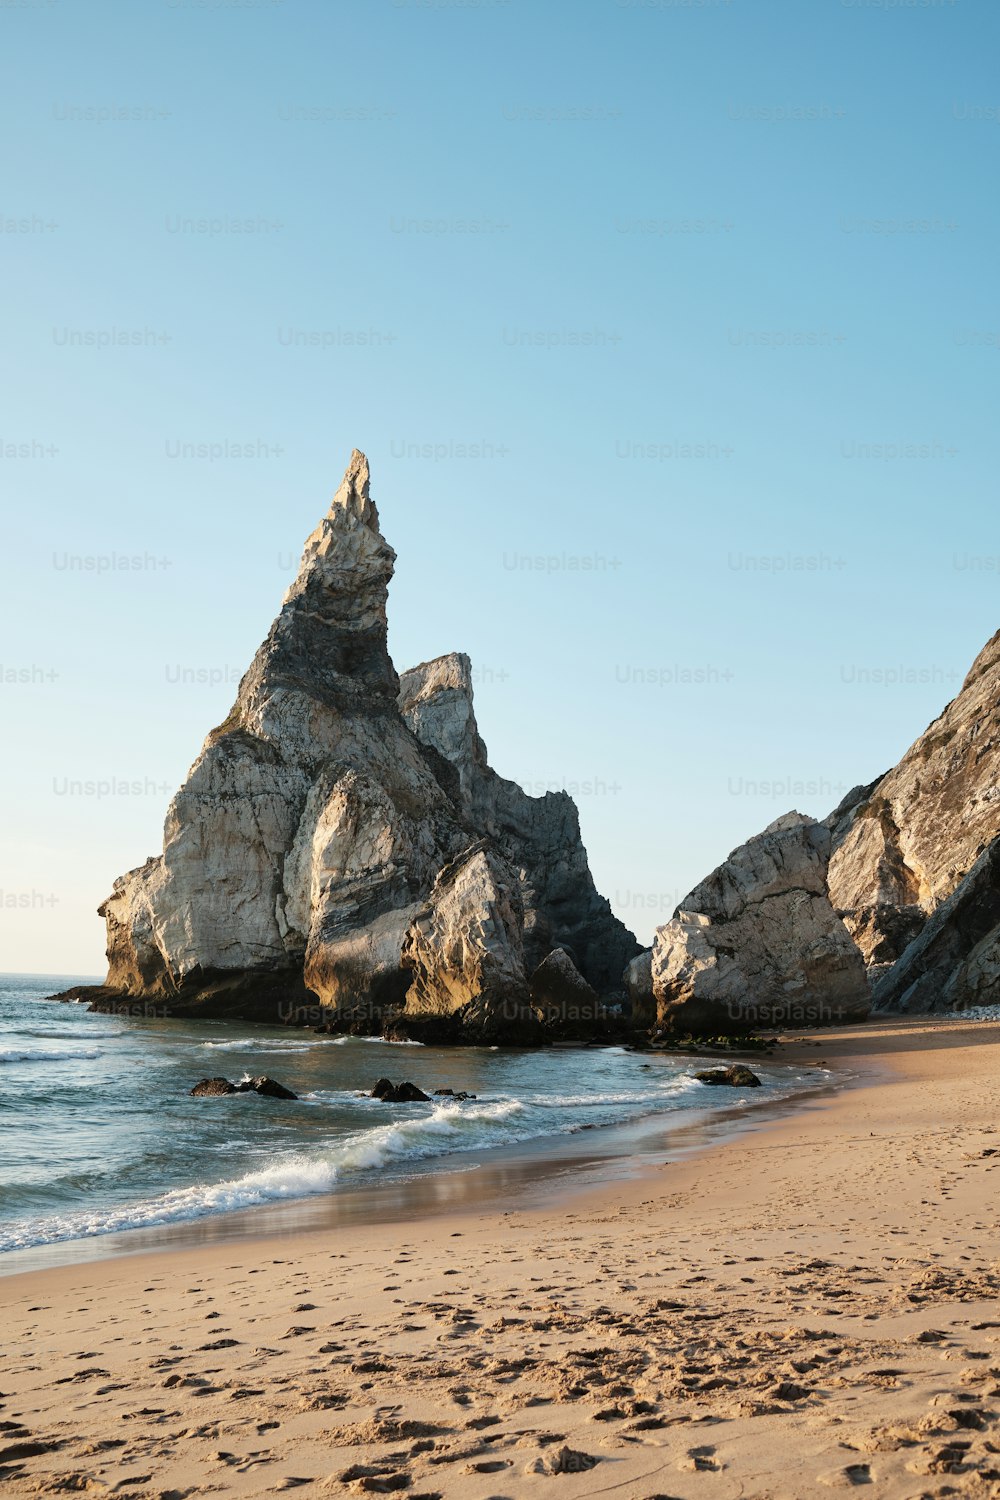 a rocky outcropping on a beach next to the ocean